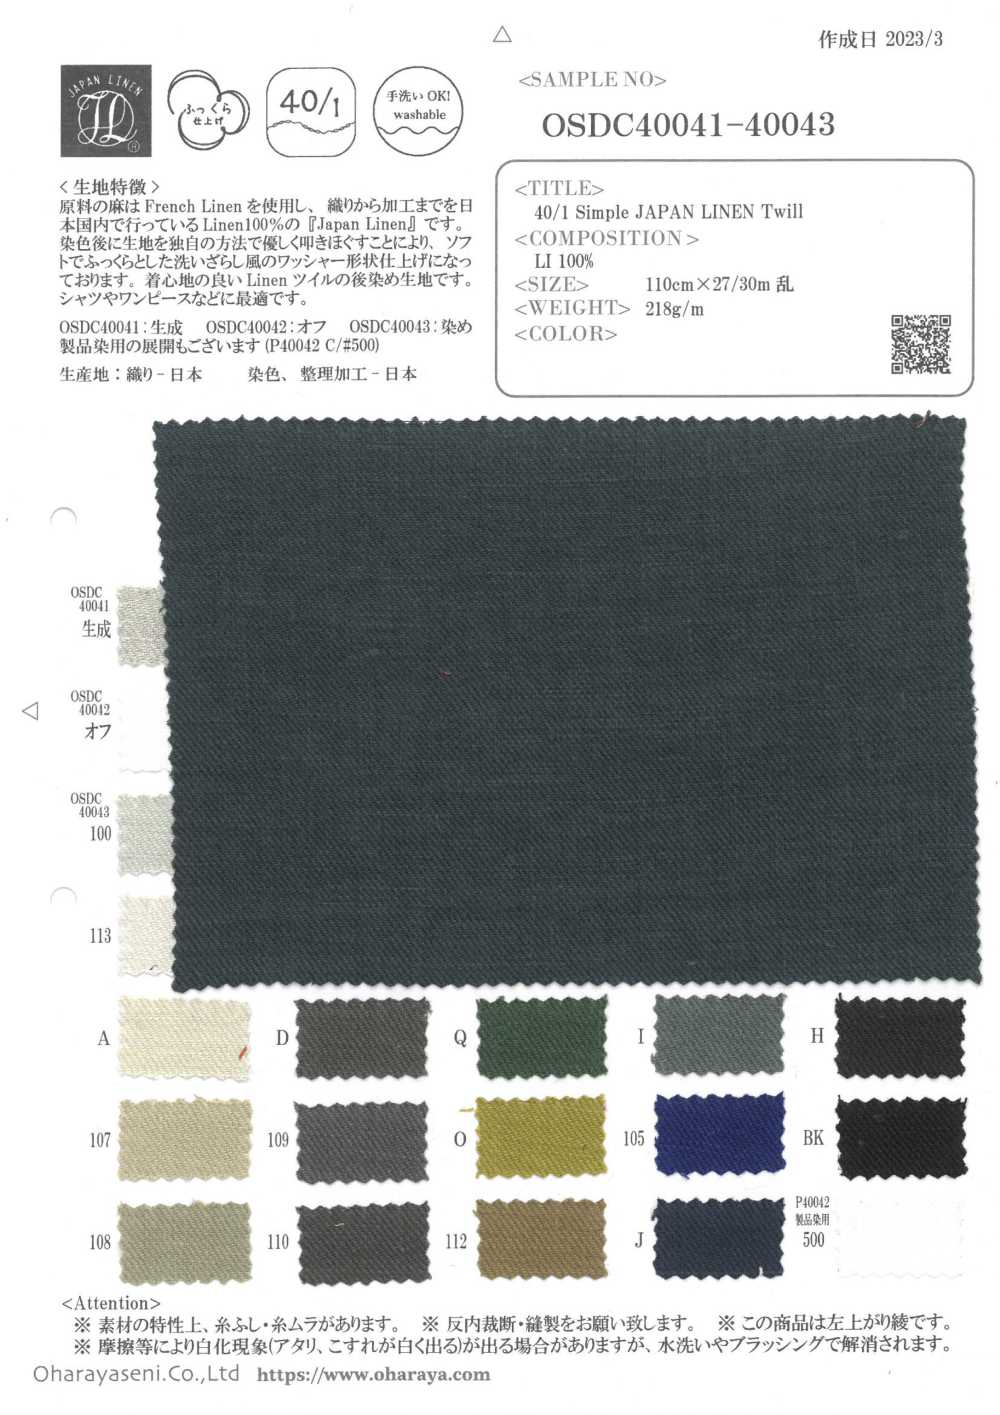 OSDC40041 40/1 Simple JAPAN LINEN Twill (Ecru)[Textilgewebe] Oharayaseni